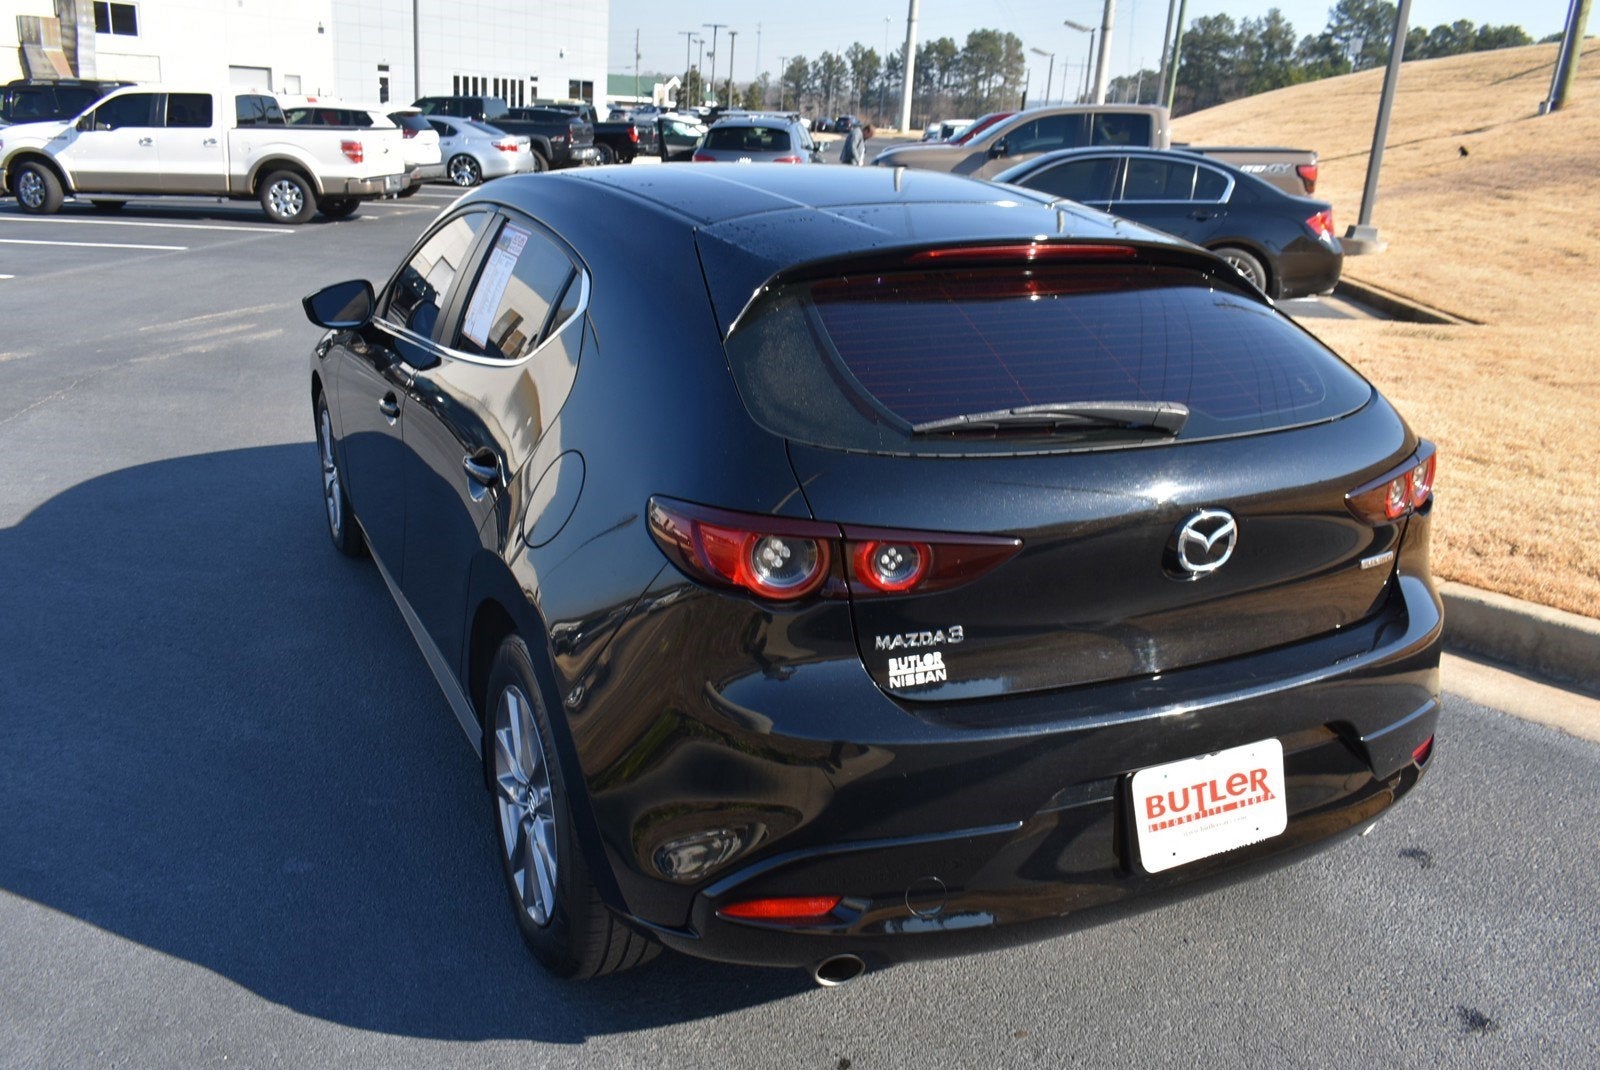 2021 Mazda Mazda3 Hatchback 2.5 S